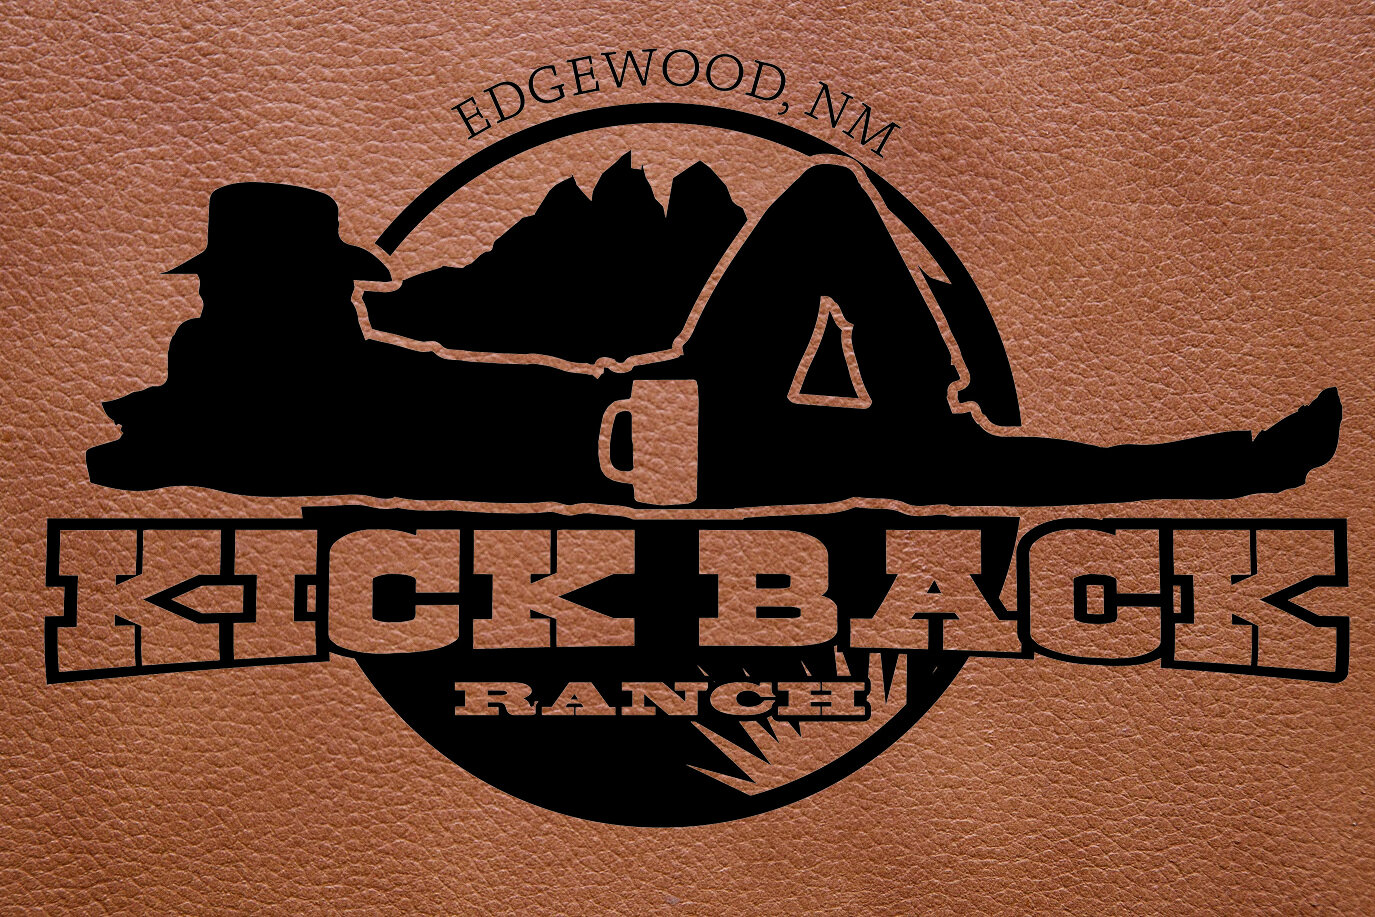 kick-back-ranch.jpg